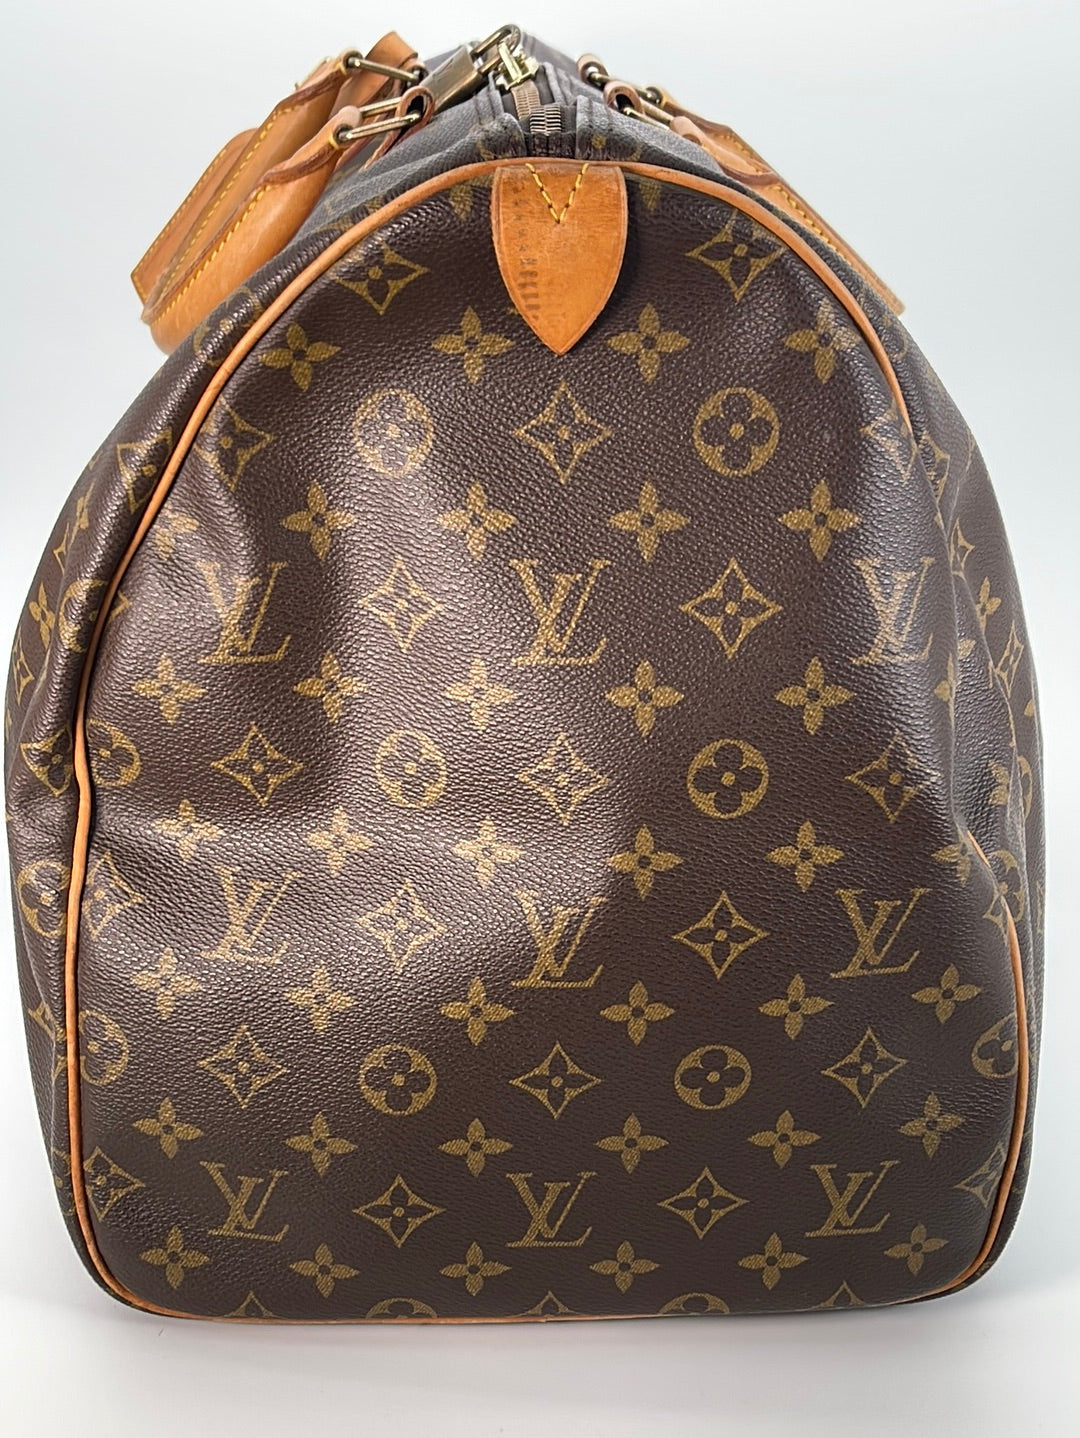 LOUIS VUITTON Novelty Not for Sale Monogram Duffle Bag Keepall